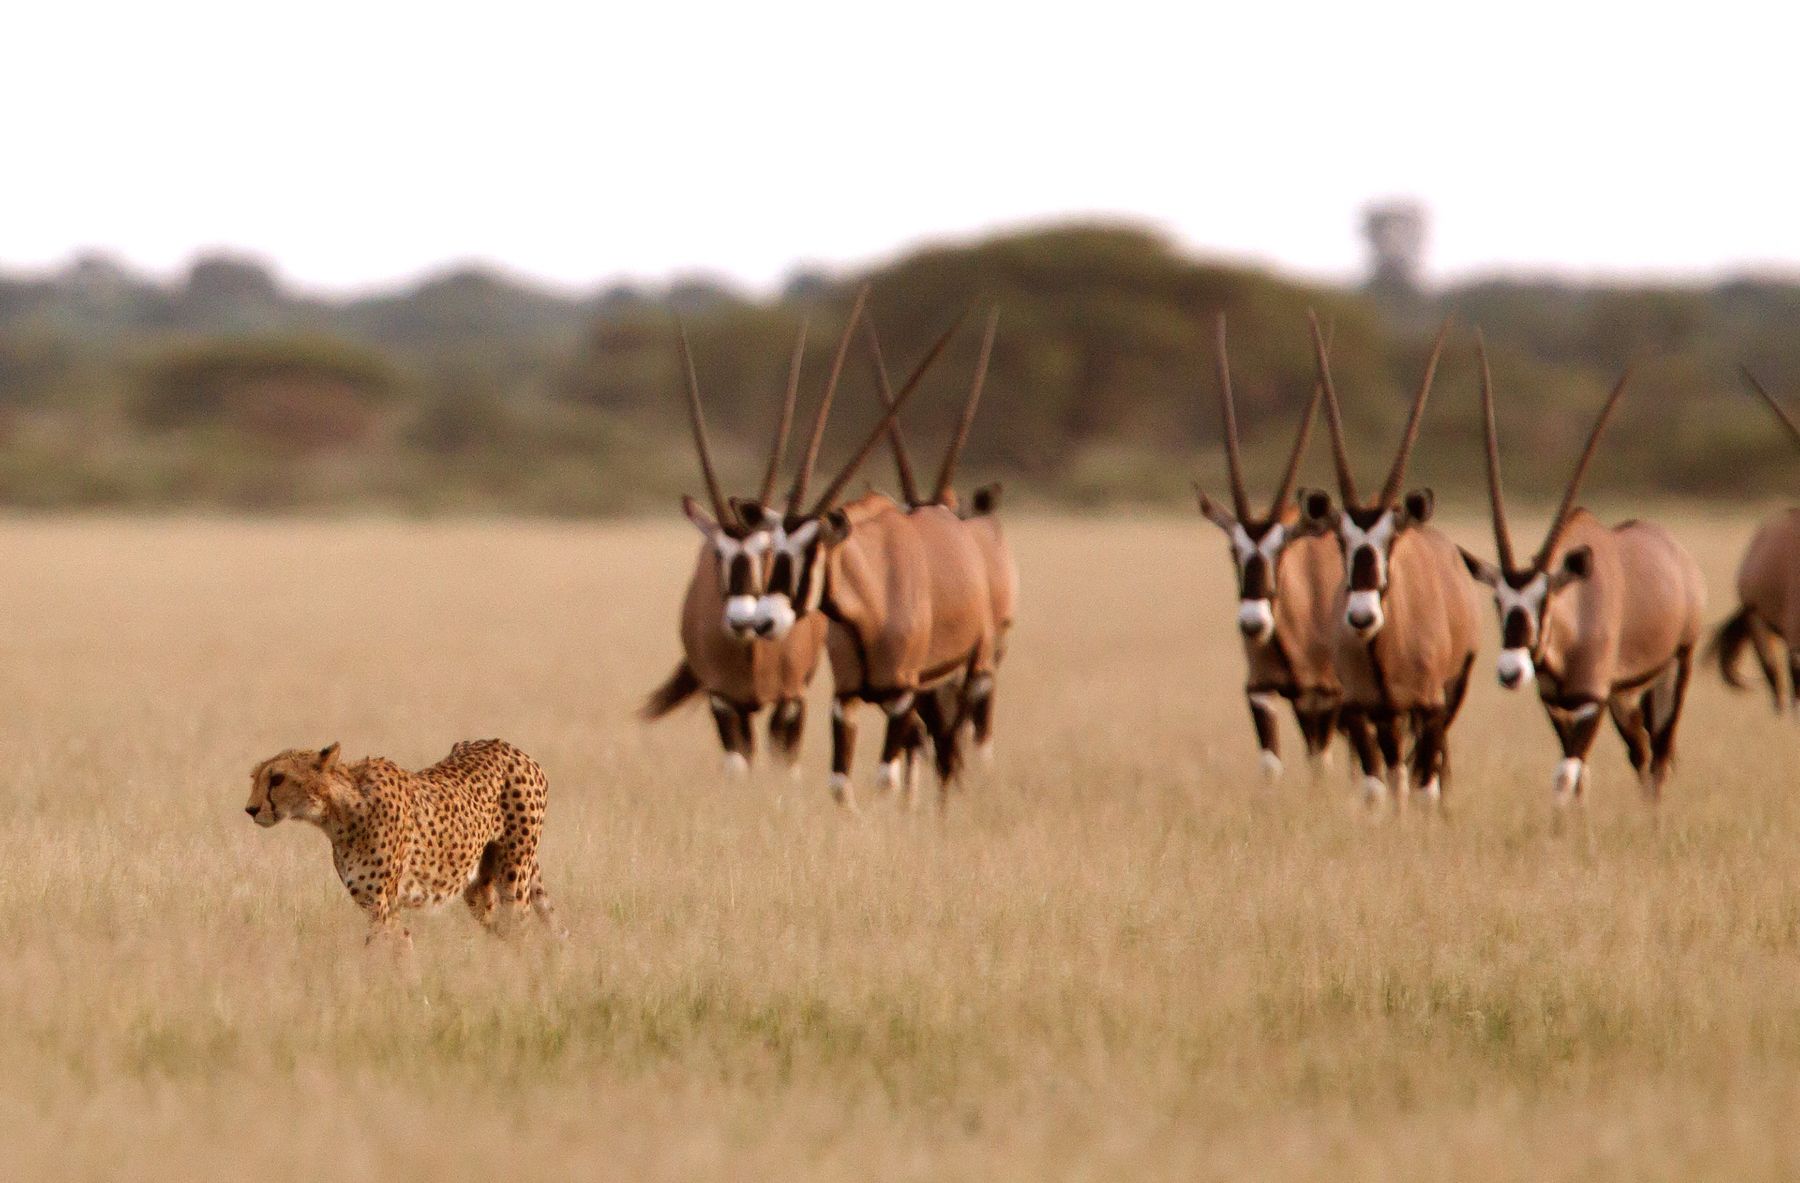 A Cheetah is followed by some Gemsboks in Botswana